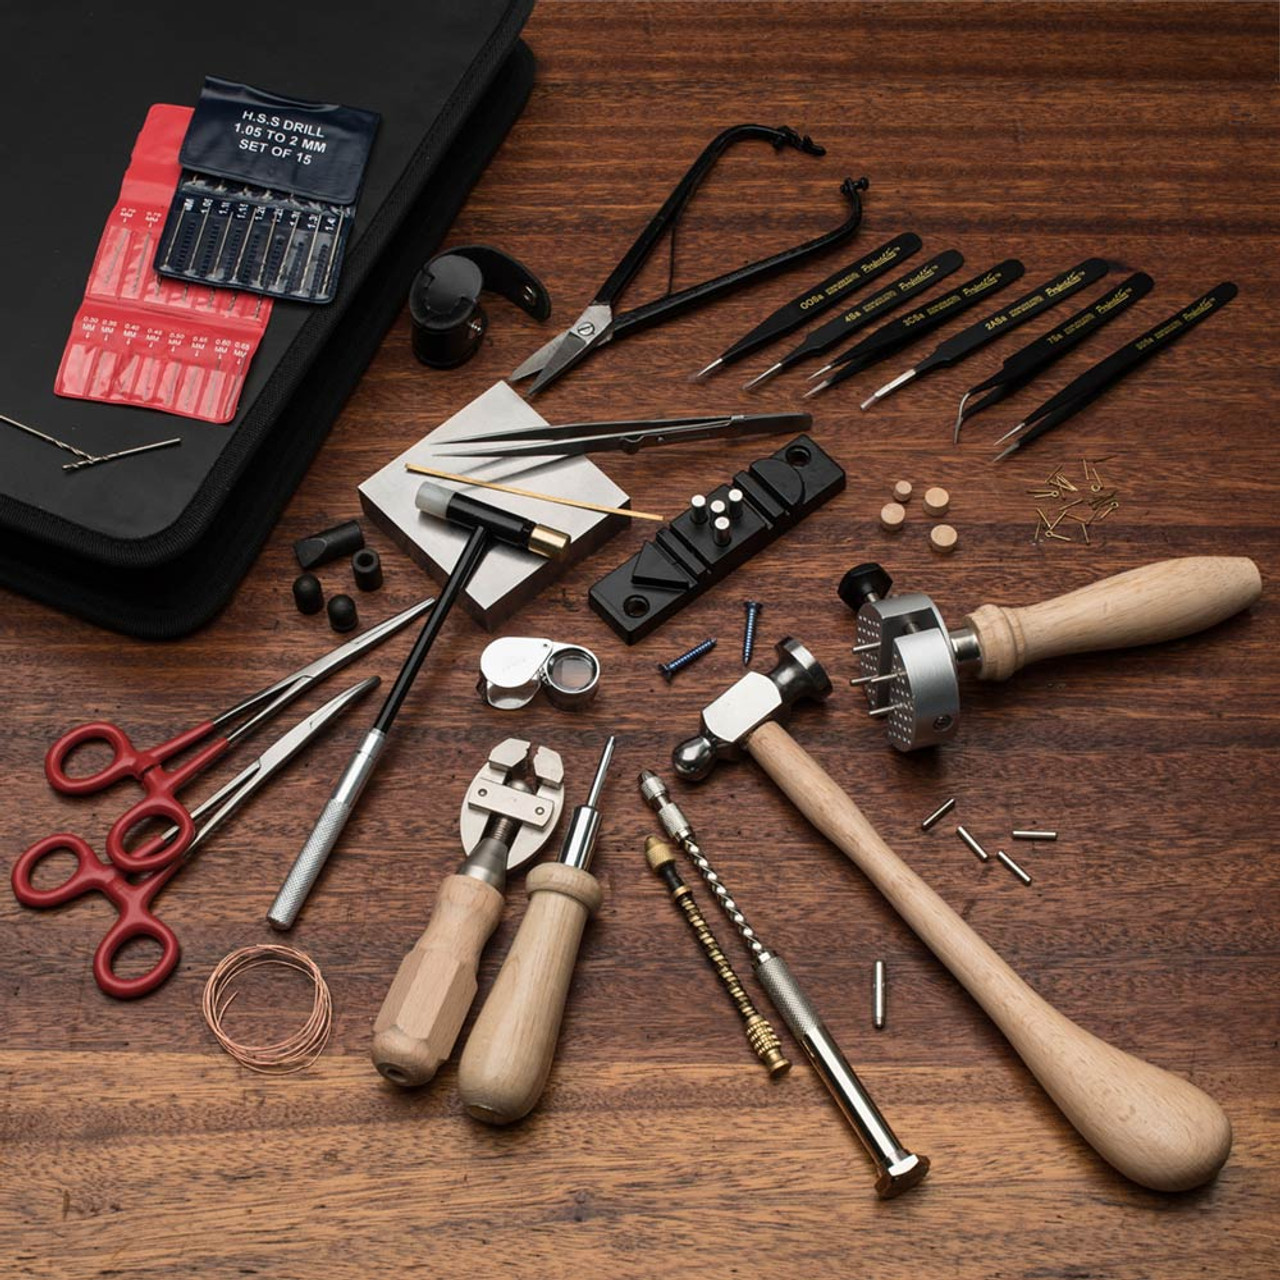 Indispensable Leather Making Tool Set DIY Leathercraft Tools Kit